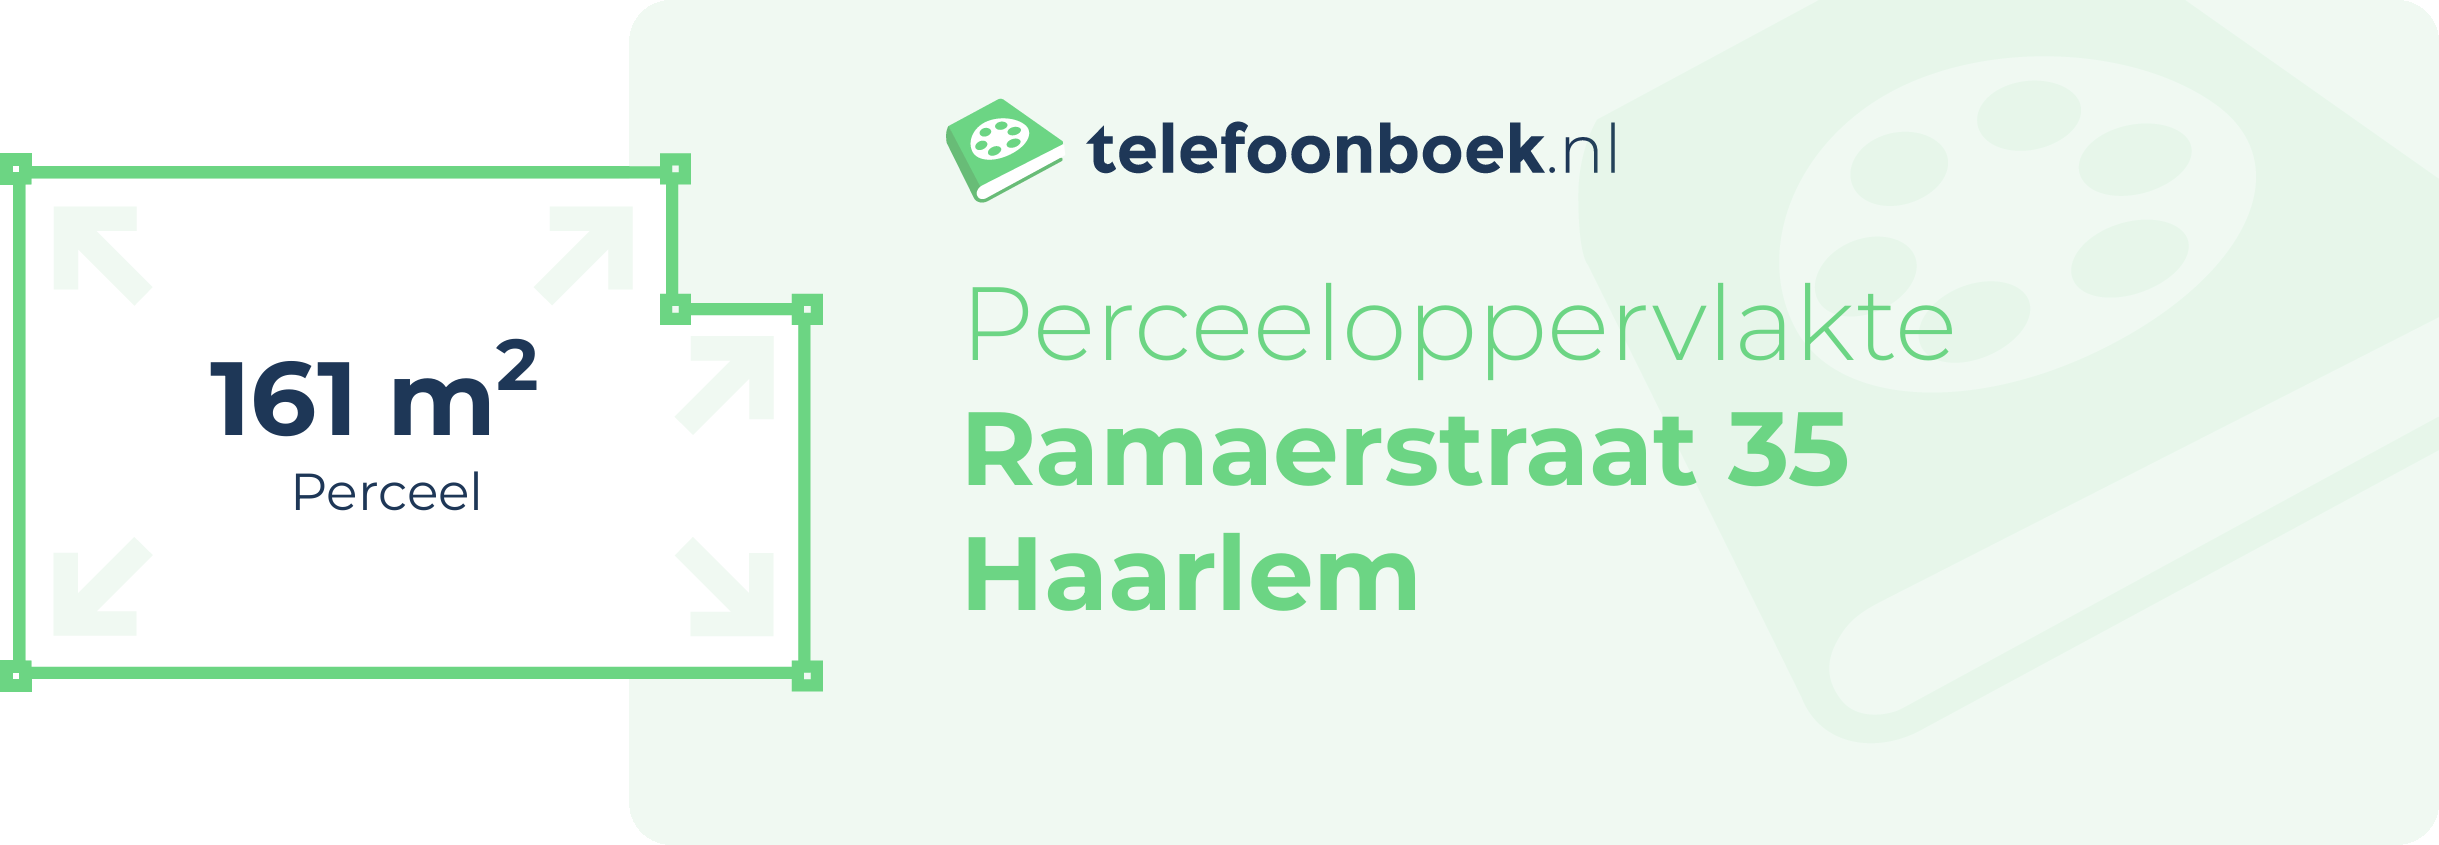 Perceeloppervlakte Ramaerstraat 35 Haarlem